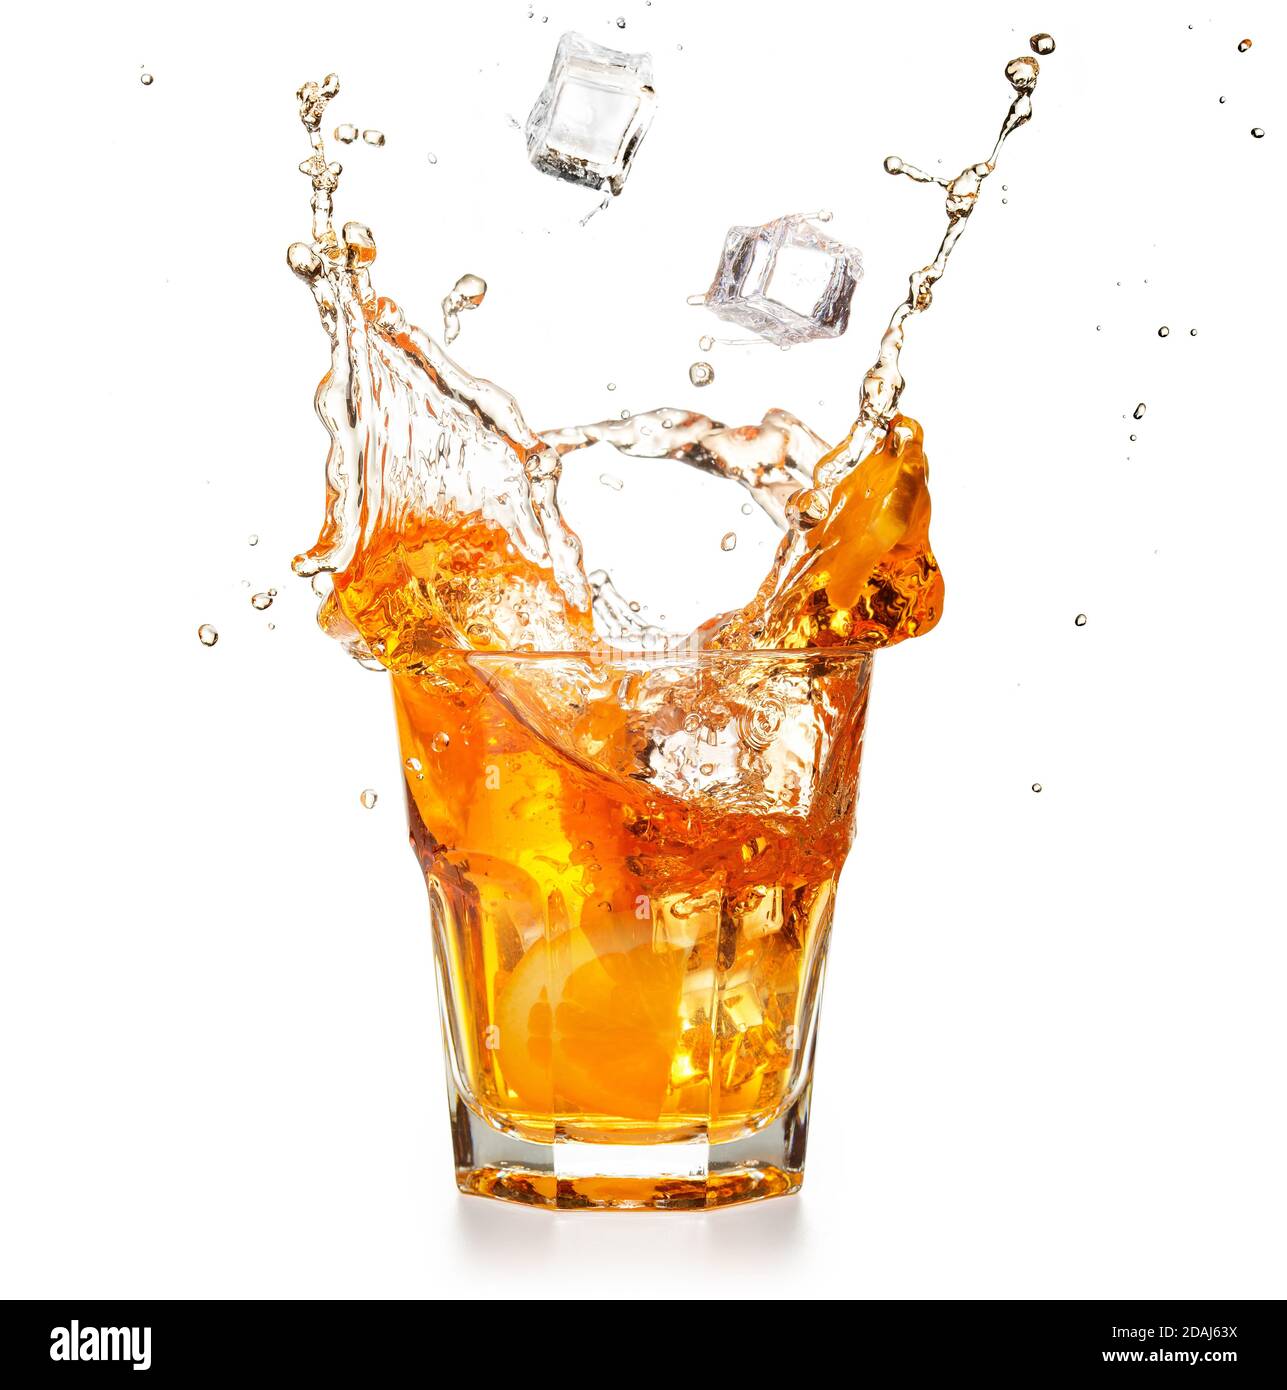 ice cubes falling into a splashing orange cocktail isolated on white Stock Photo